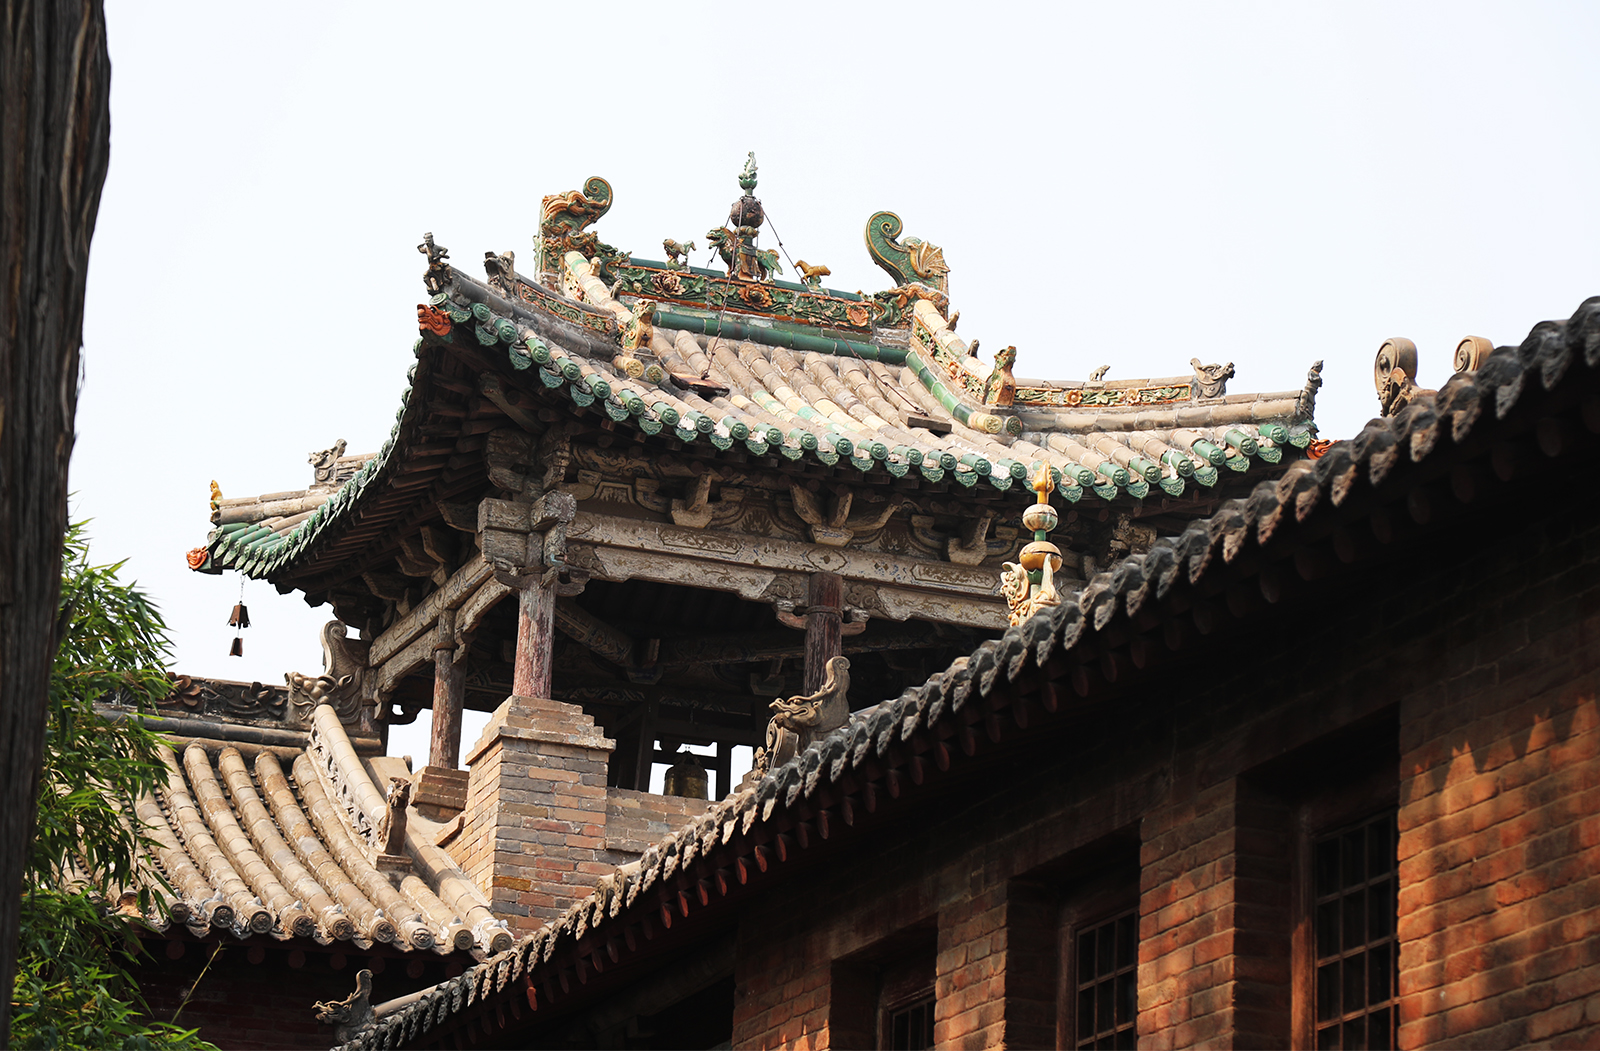 Jade Emperor Temple features impressive architecture. /CGTN